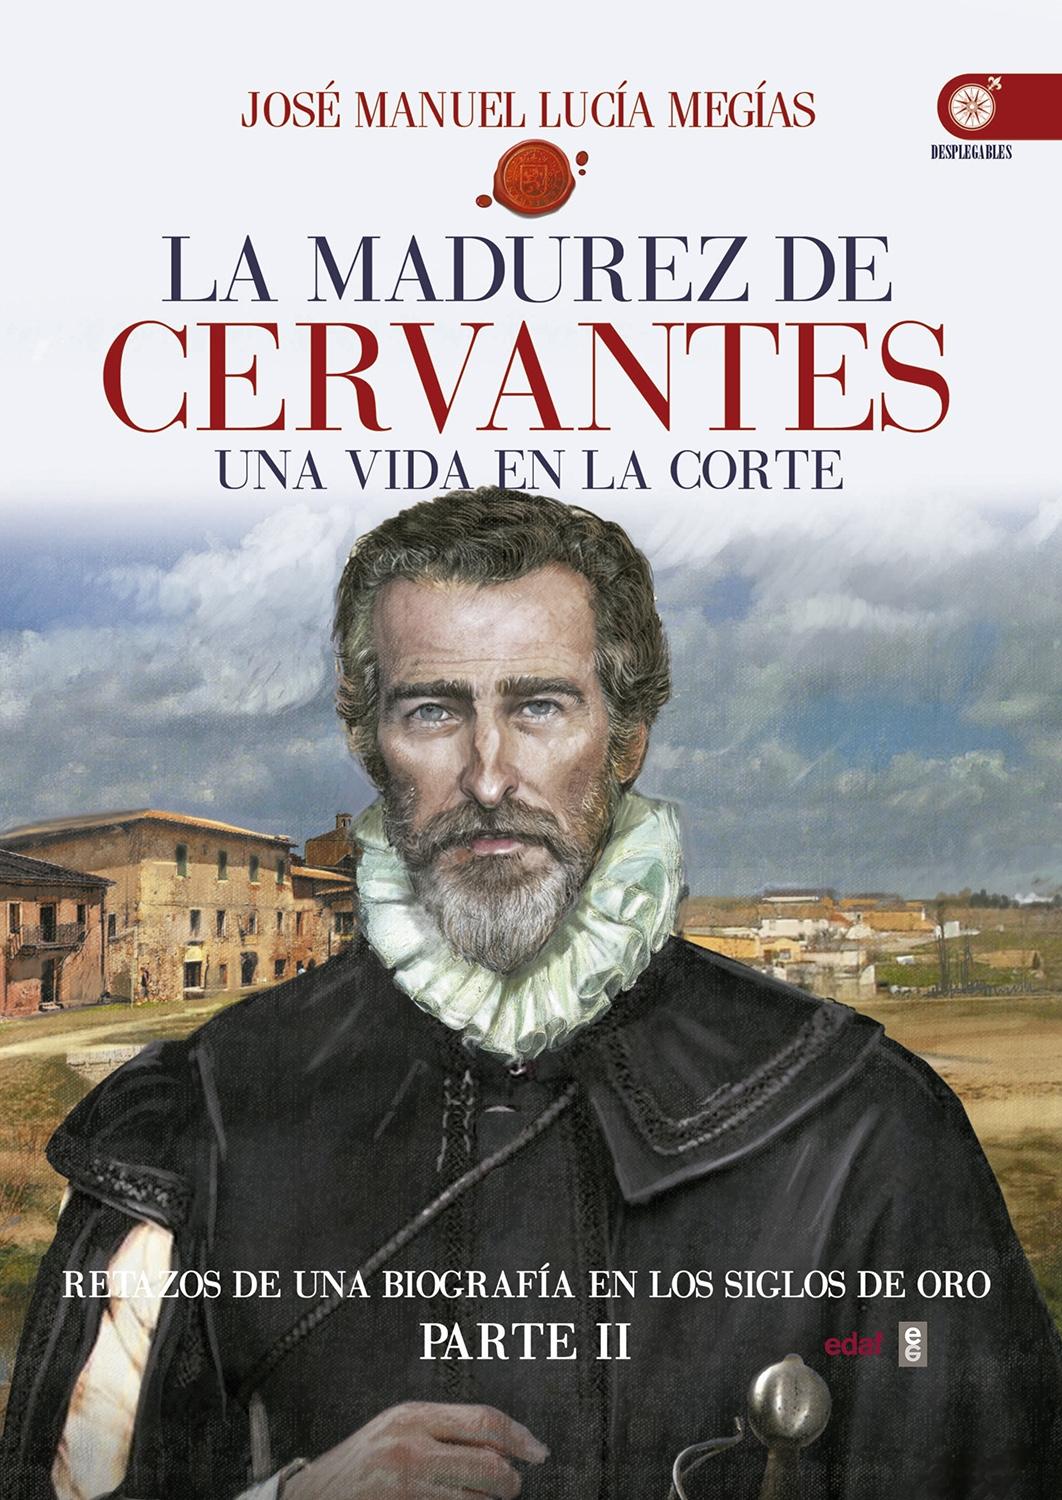 La Madurez de Cervantes "Una Vida en la Corte". 